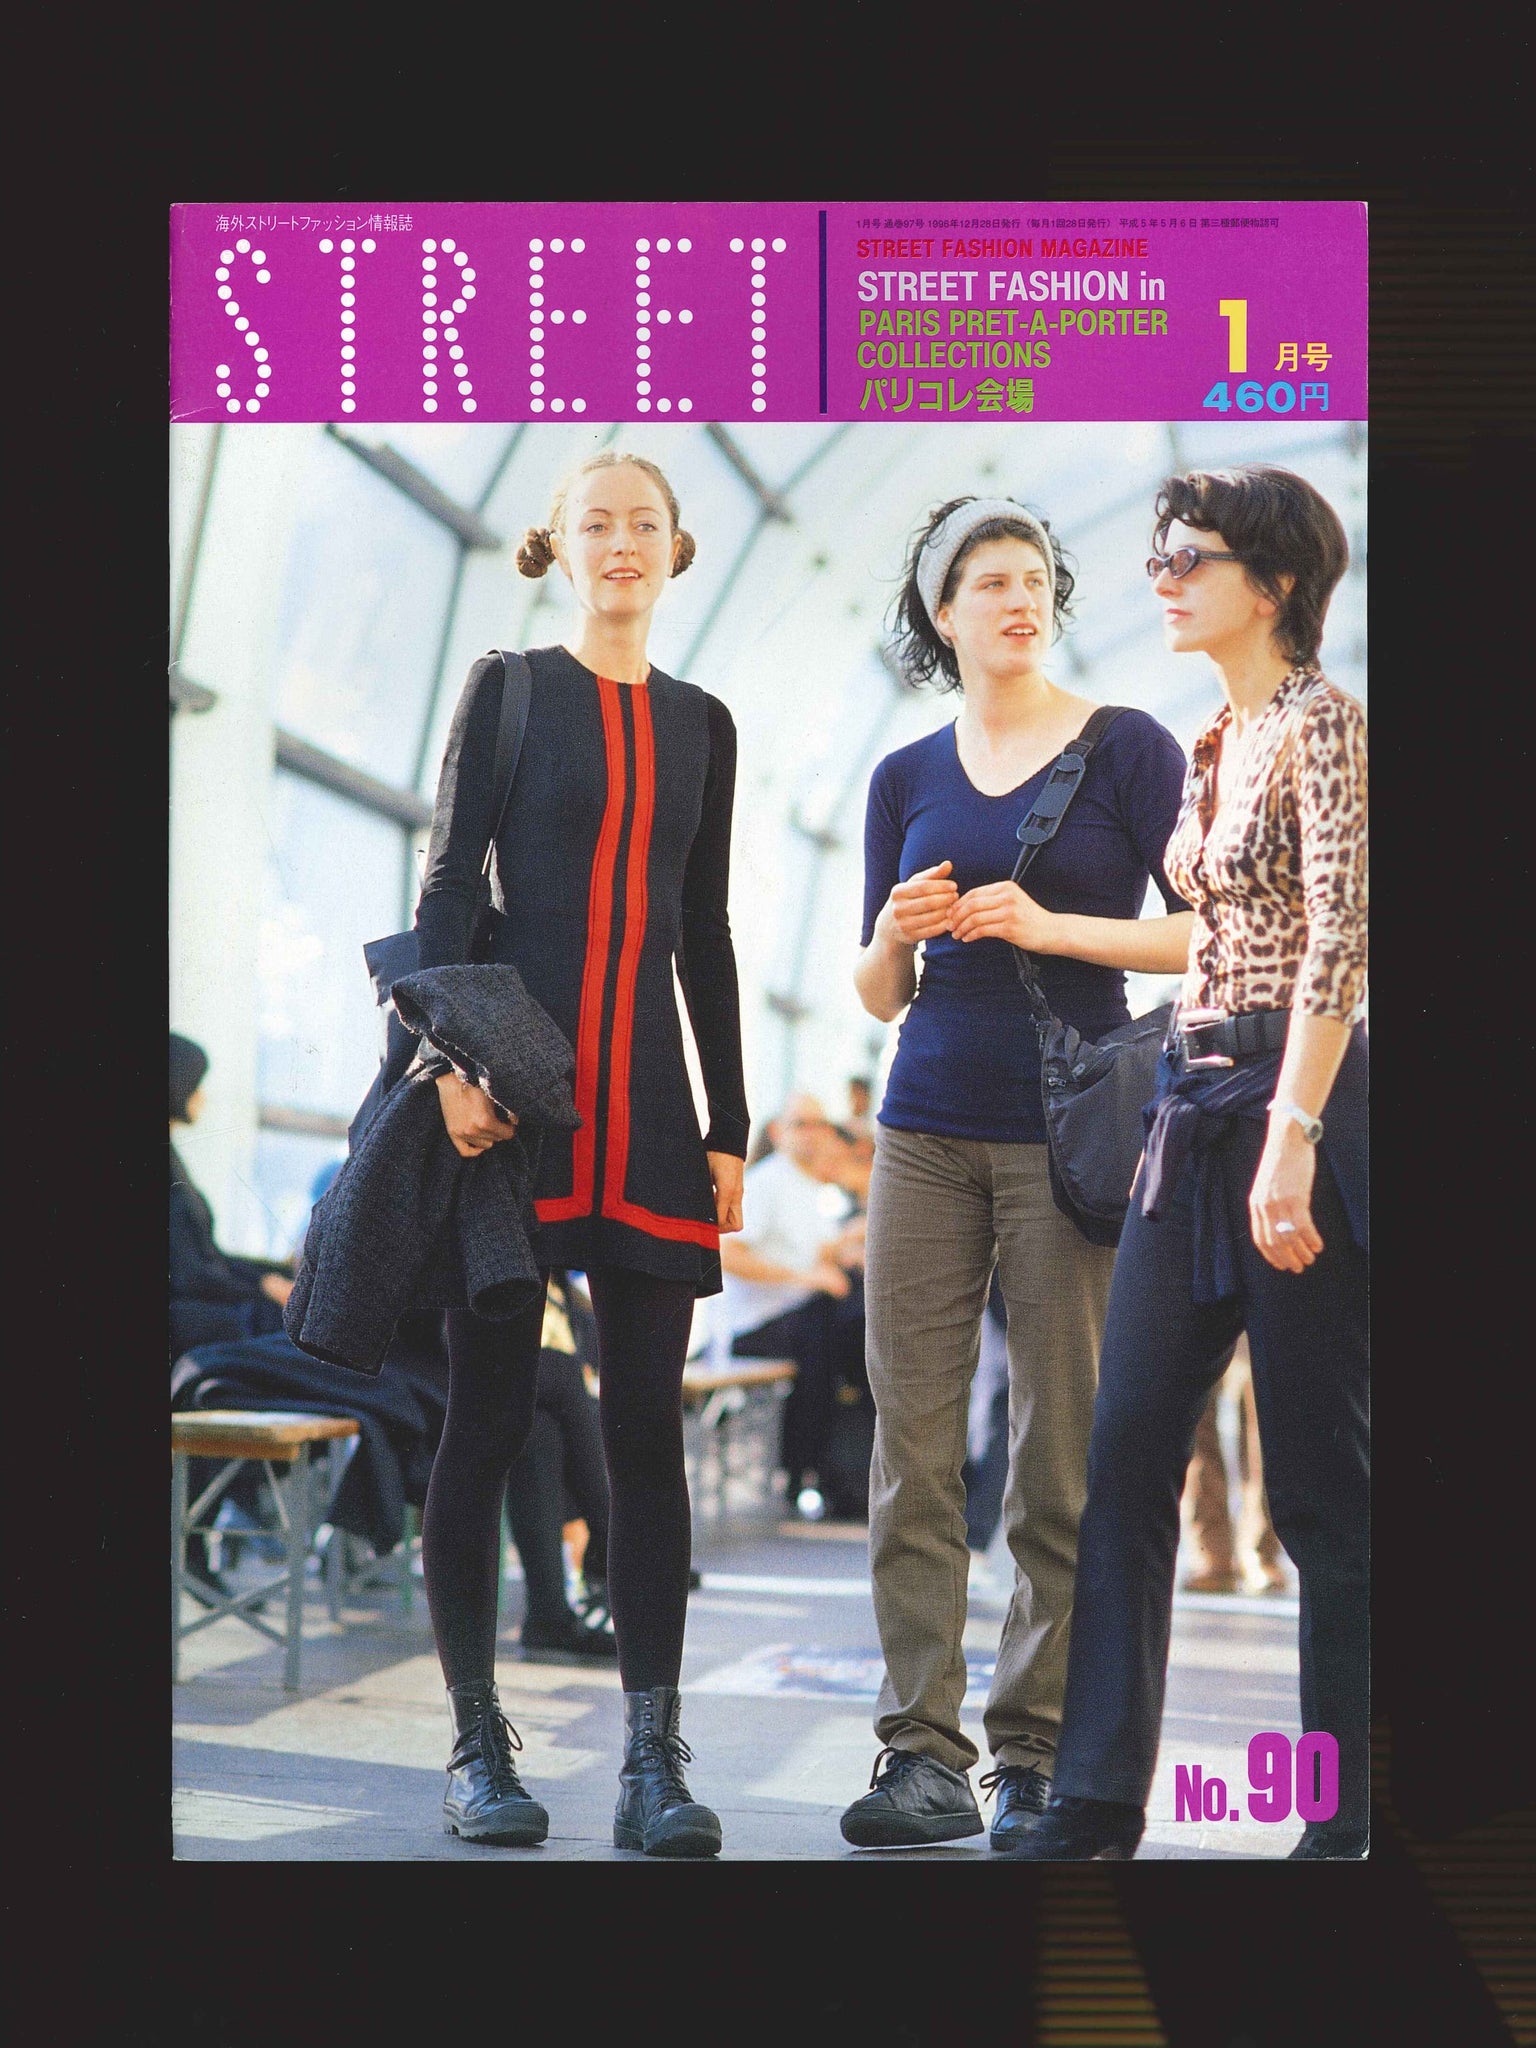 STREET magazine no. 90 / january 1997 / paris collections / Shoichi Aoki